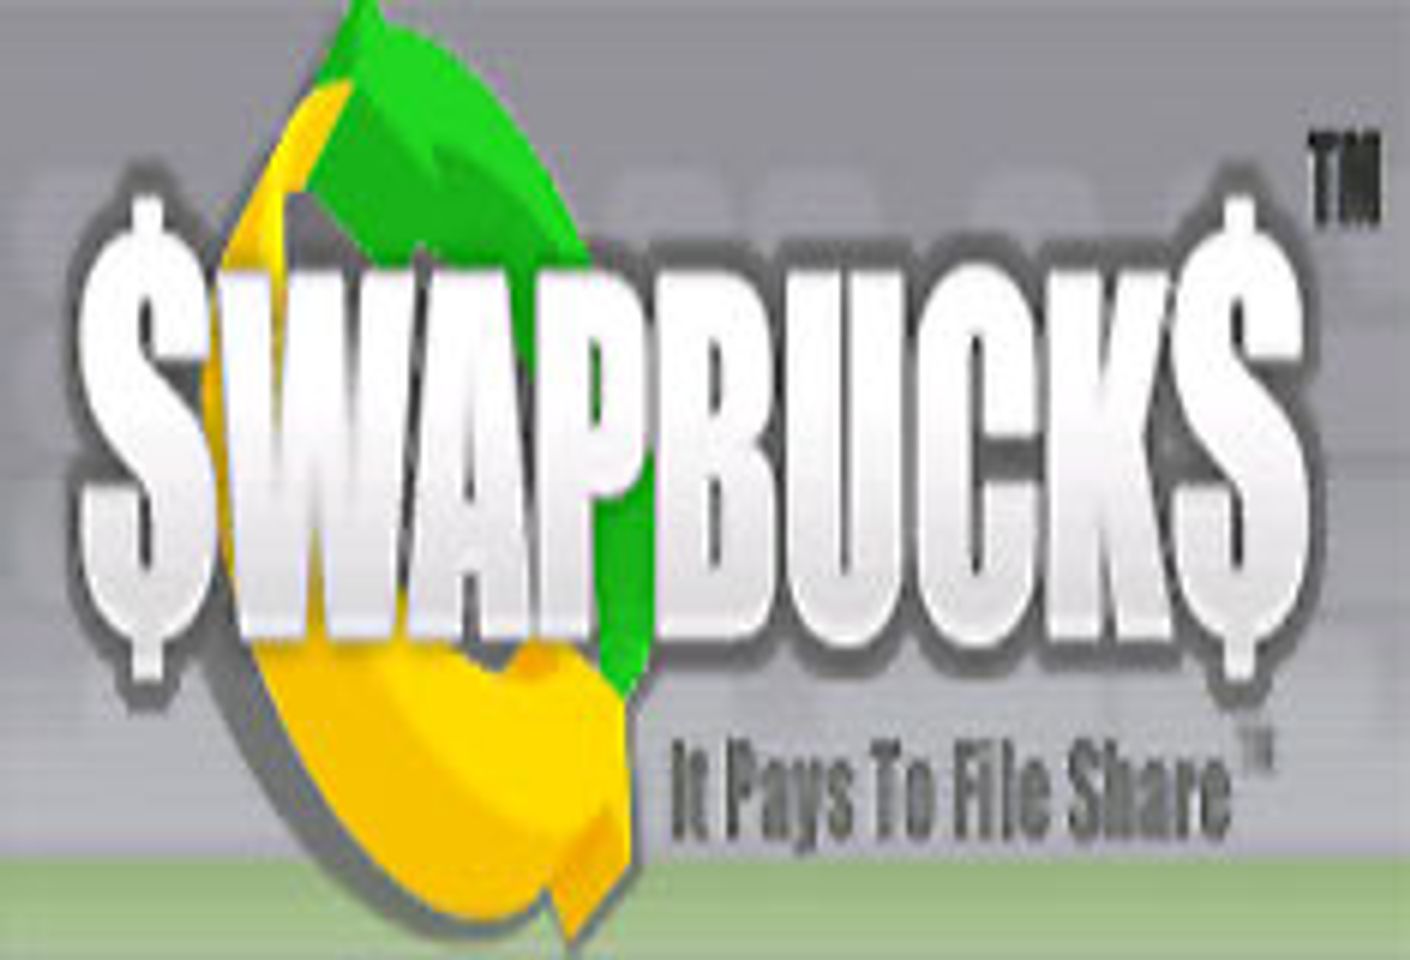 SwapBucks.com Makes File-Sharing Legal